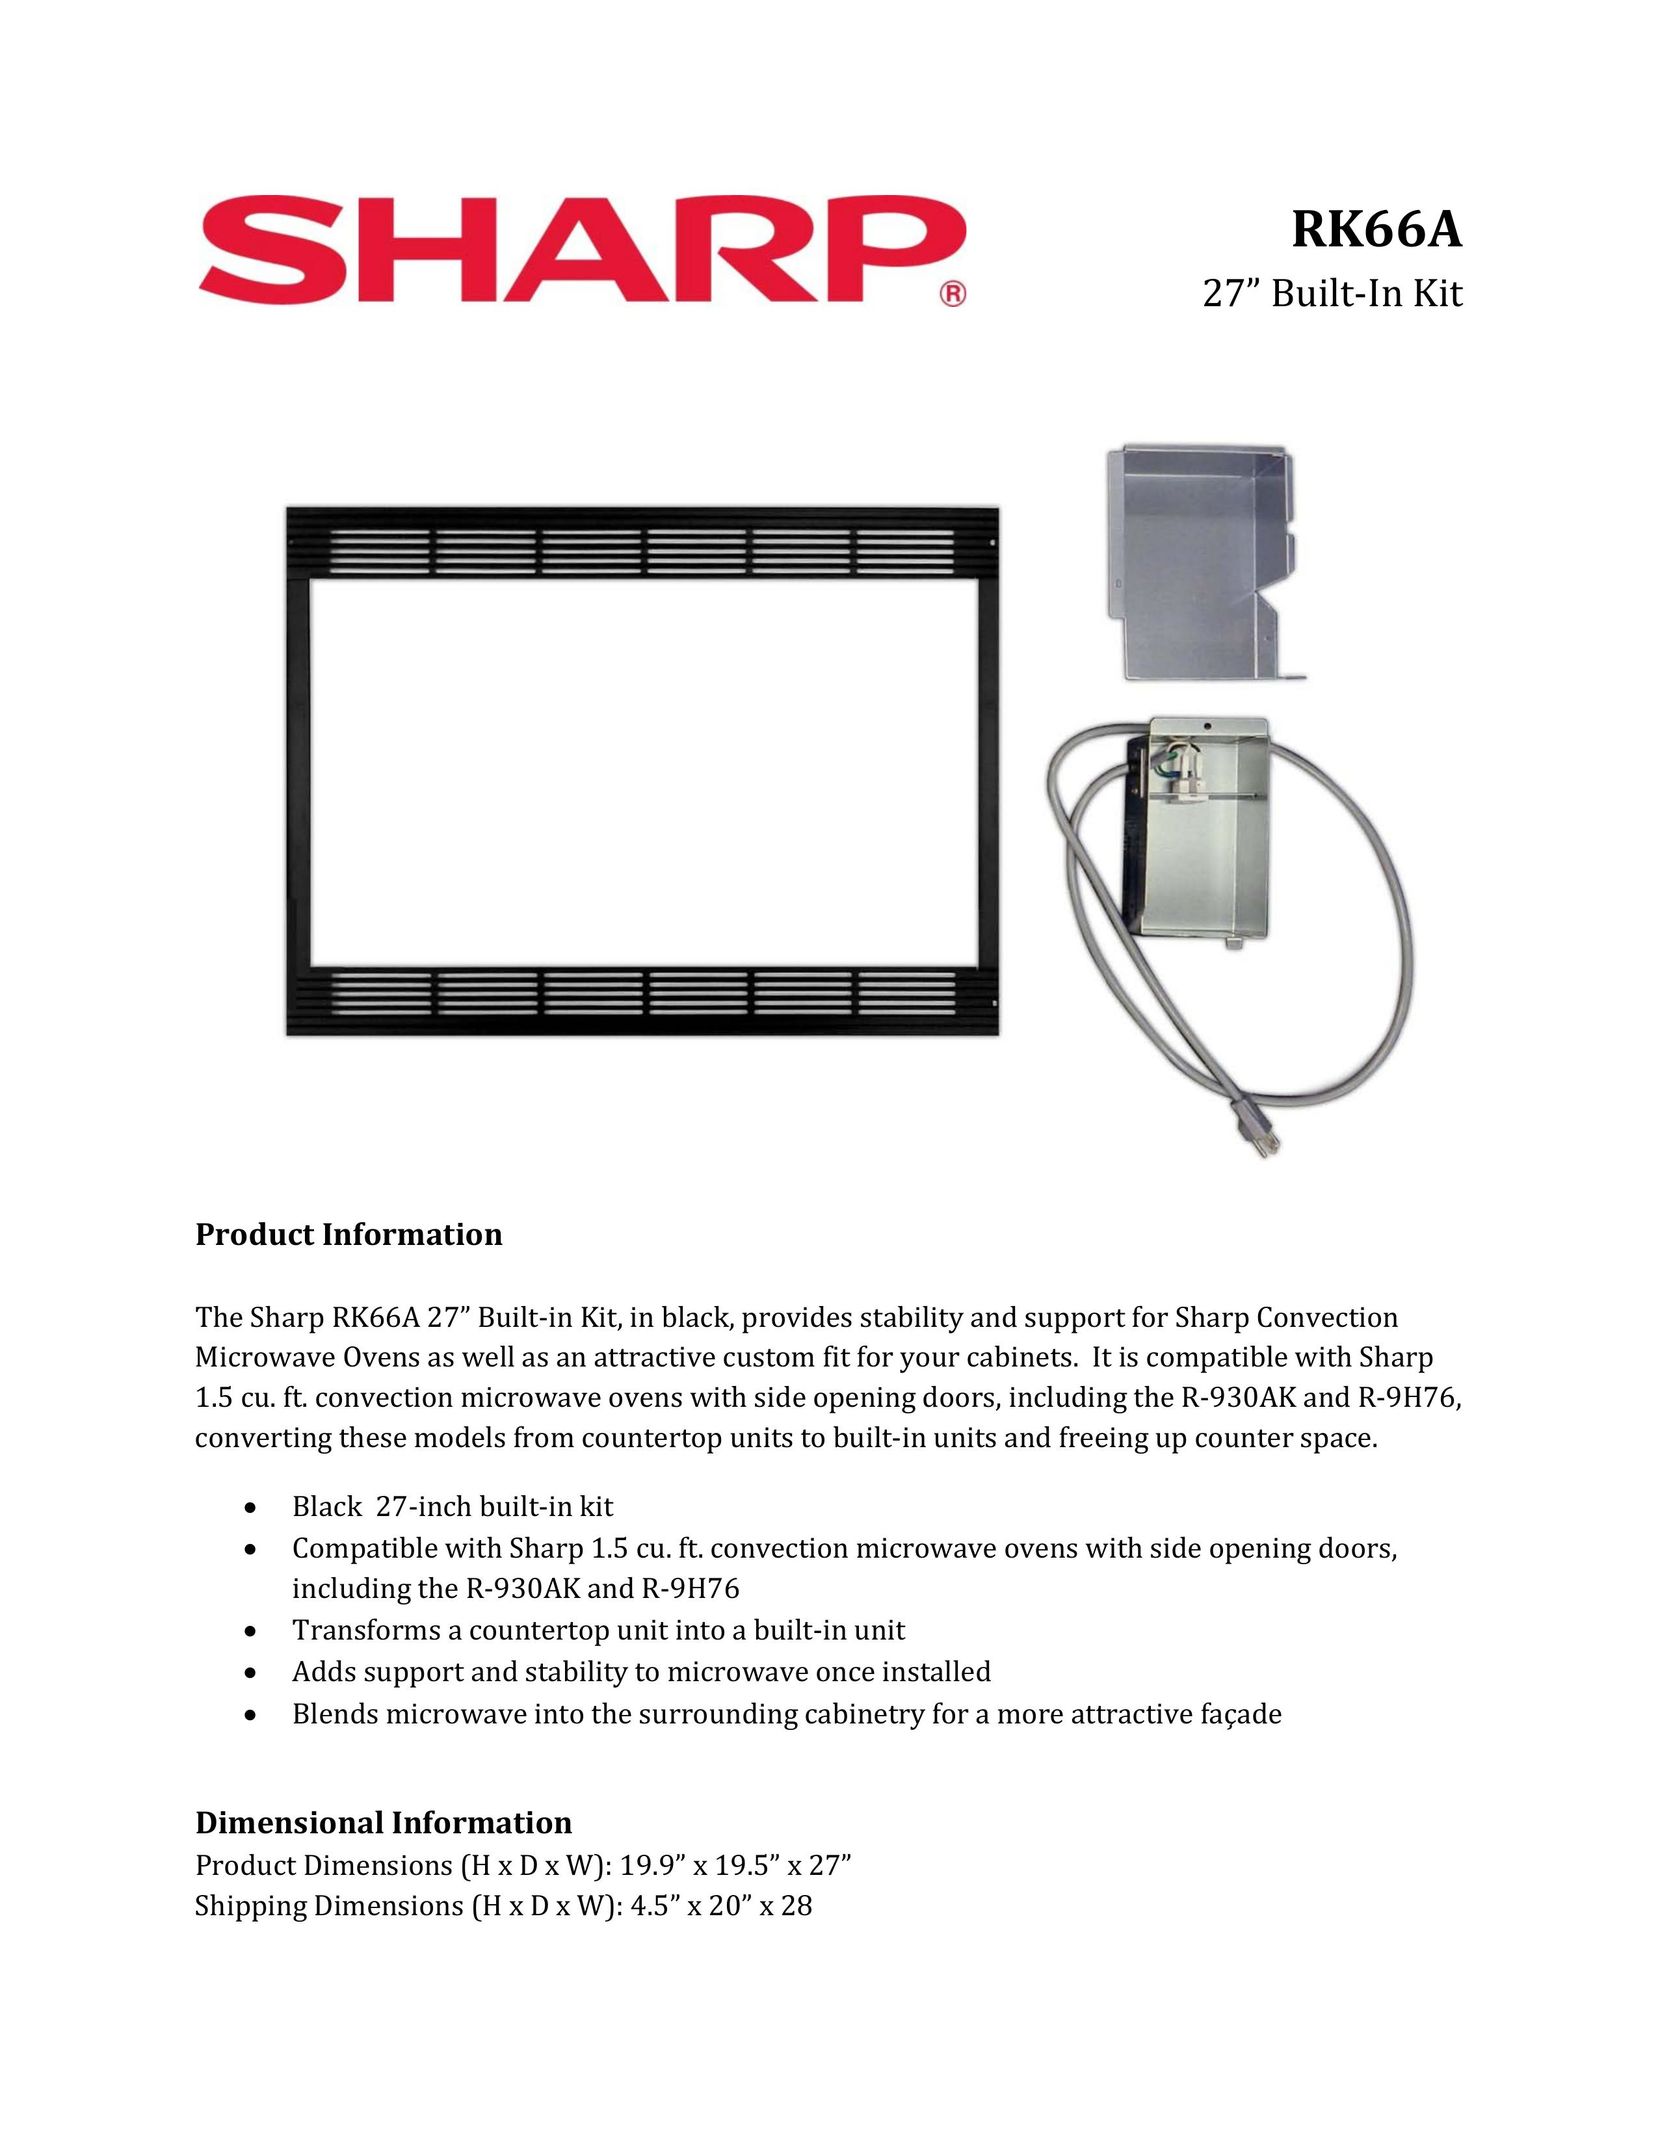 Sharp RK66A Appliance Trim Kit User Manual